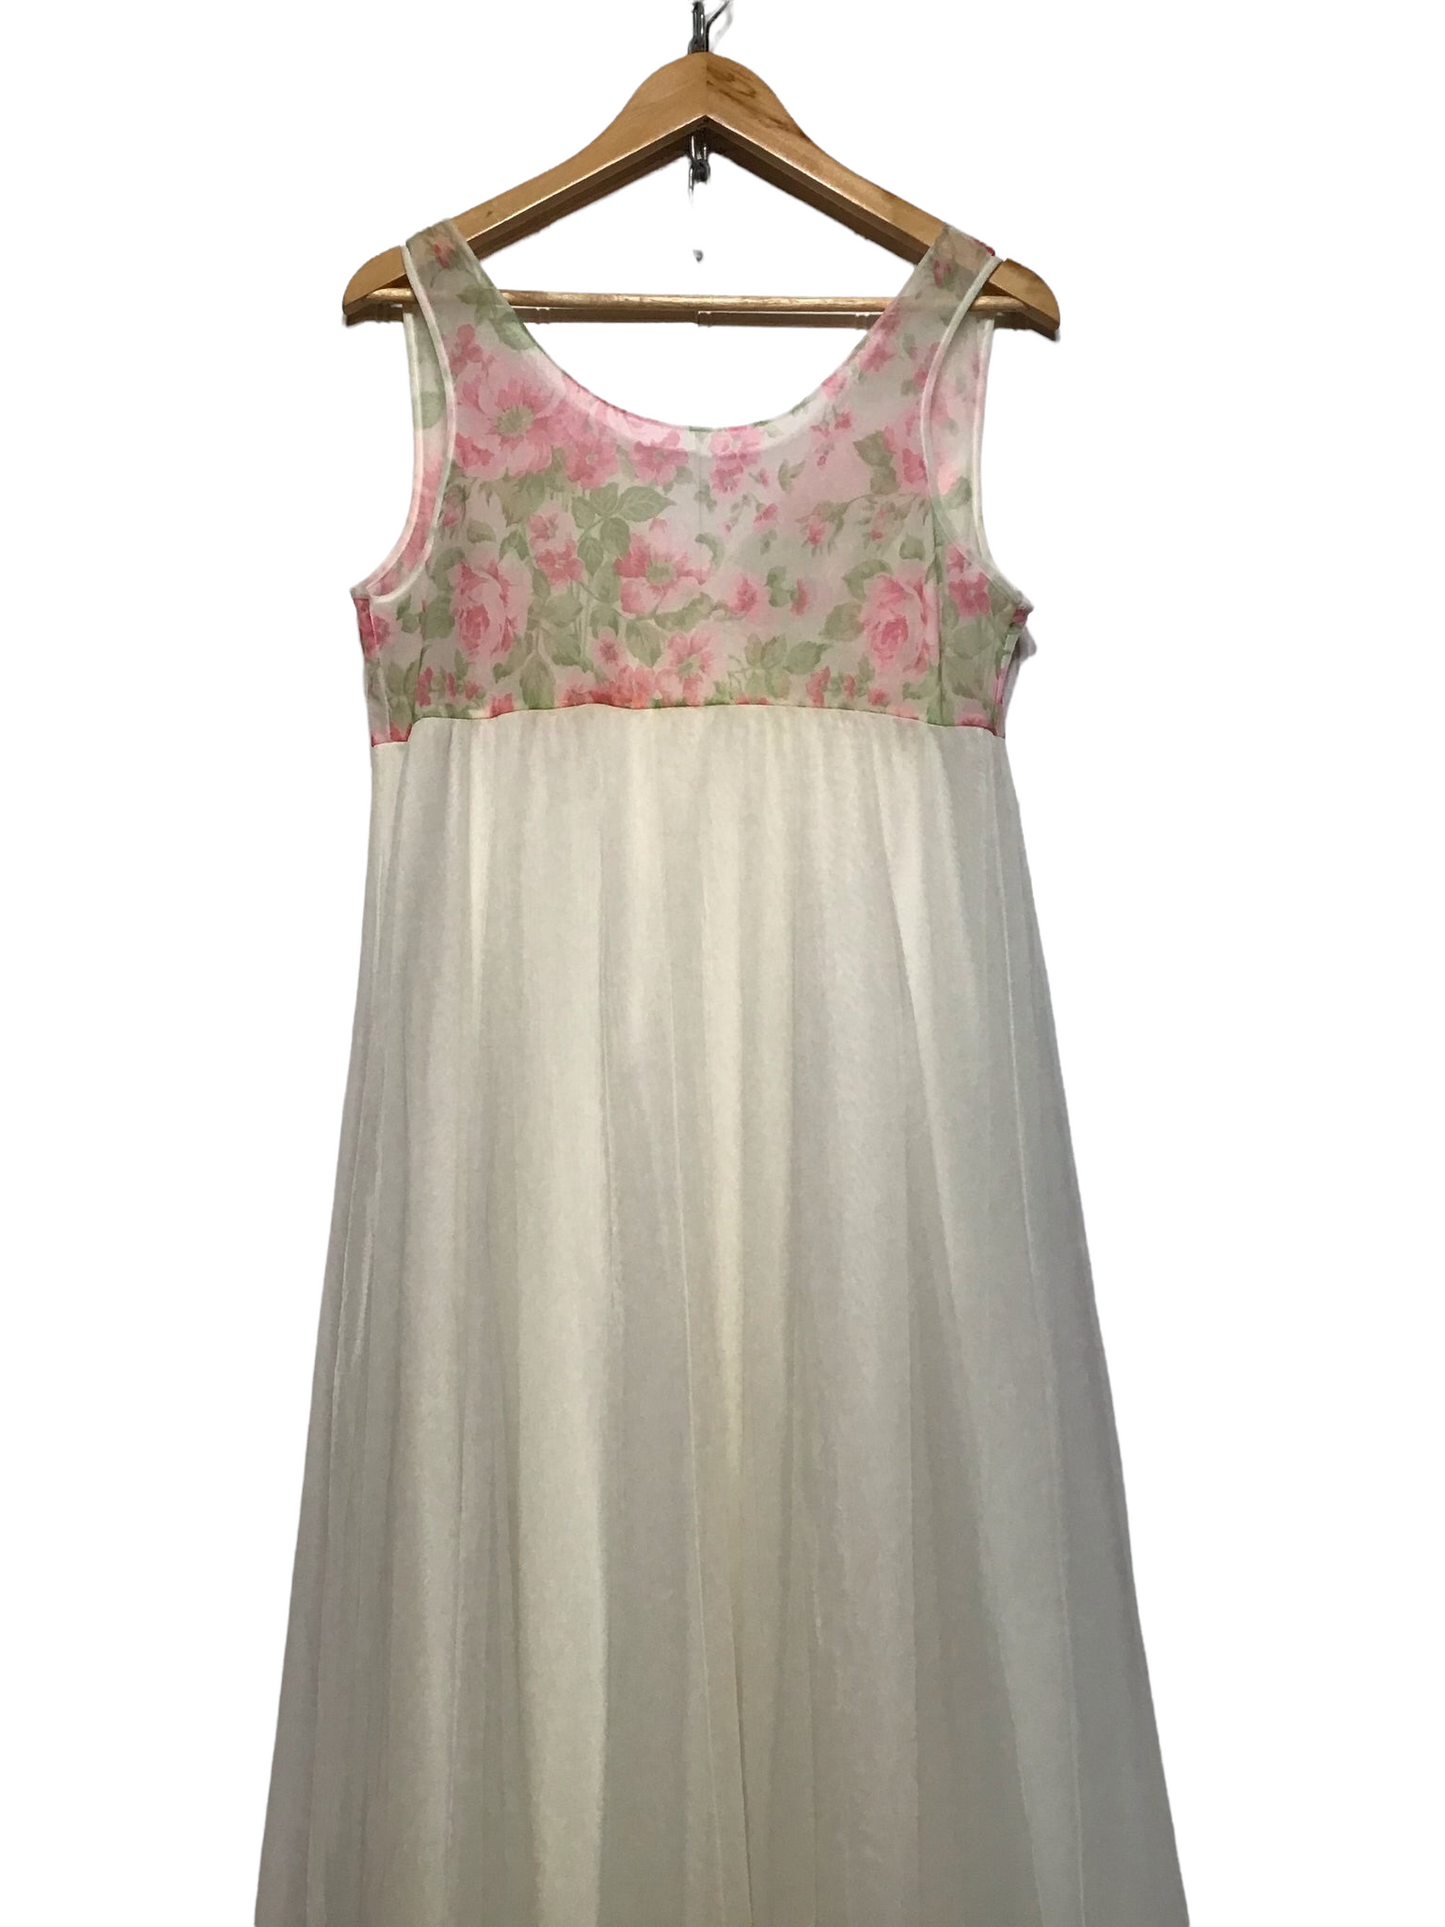 Rose Patterned Sheer Long Dress (Size XXL)